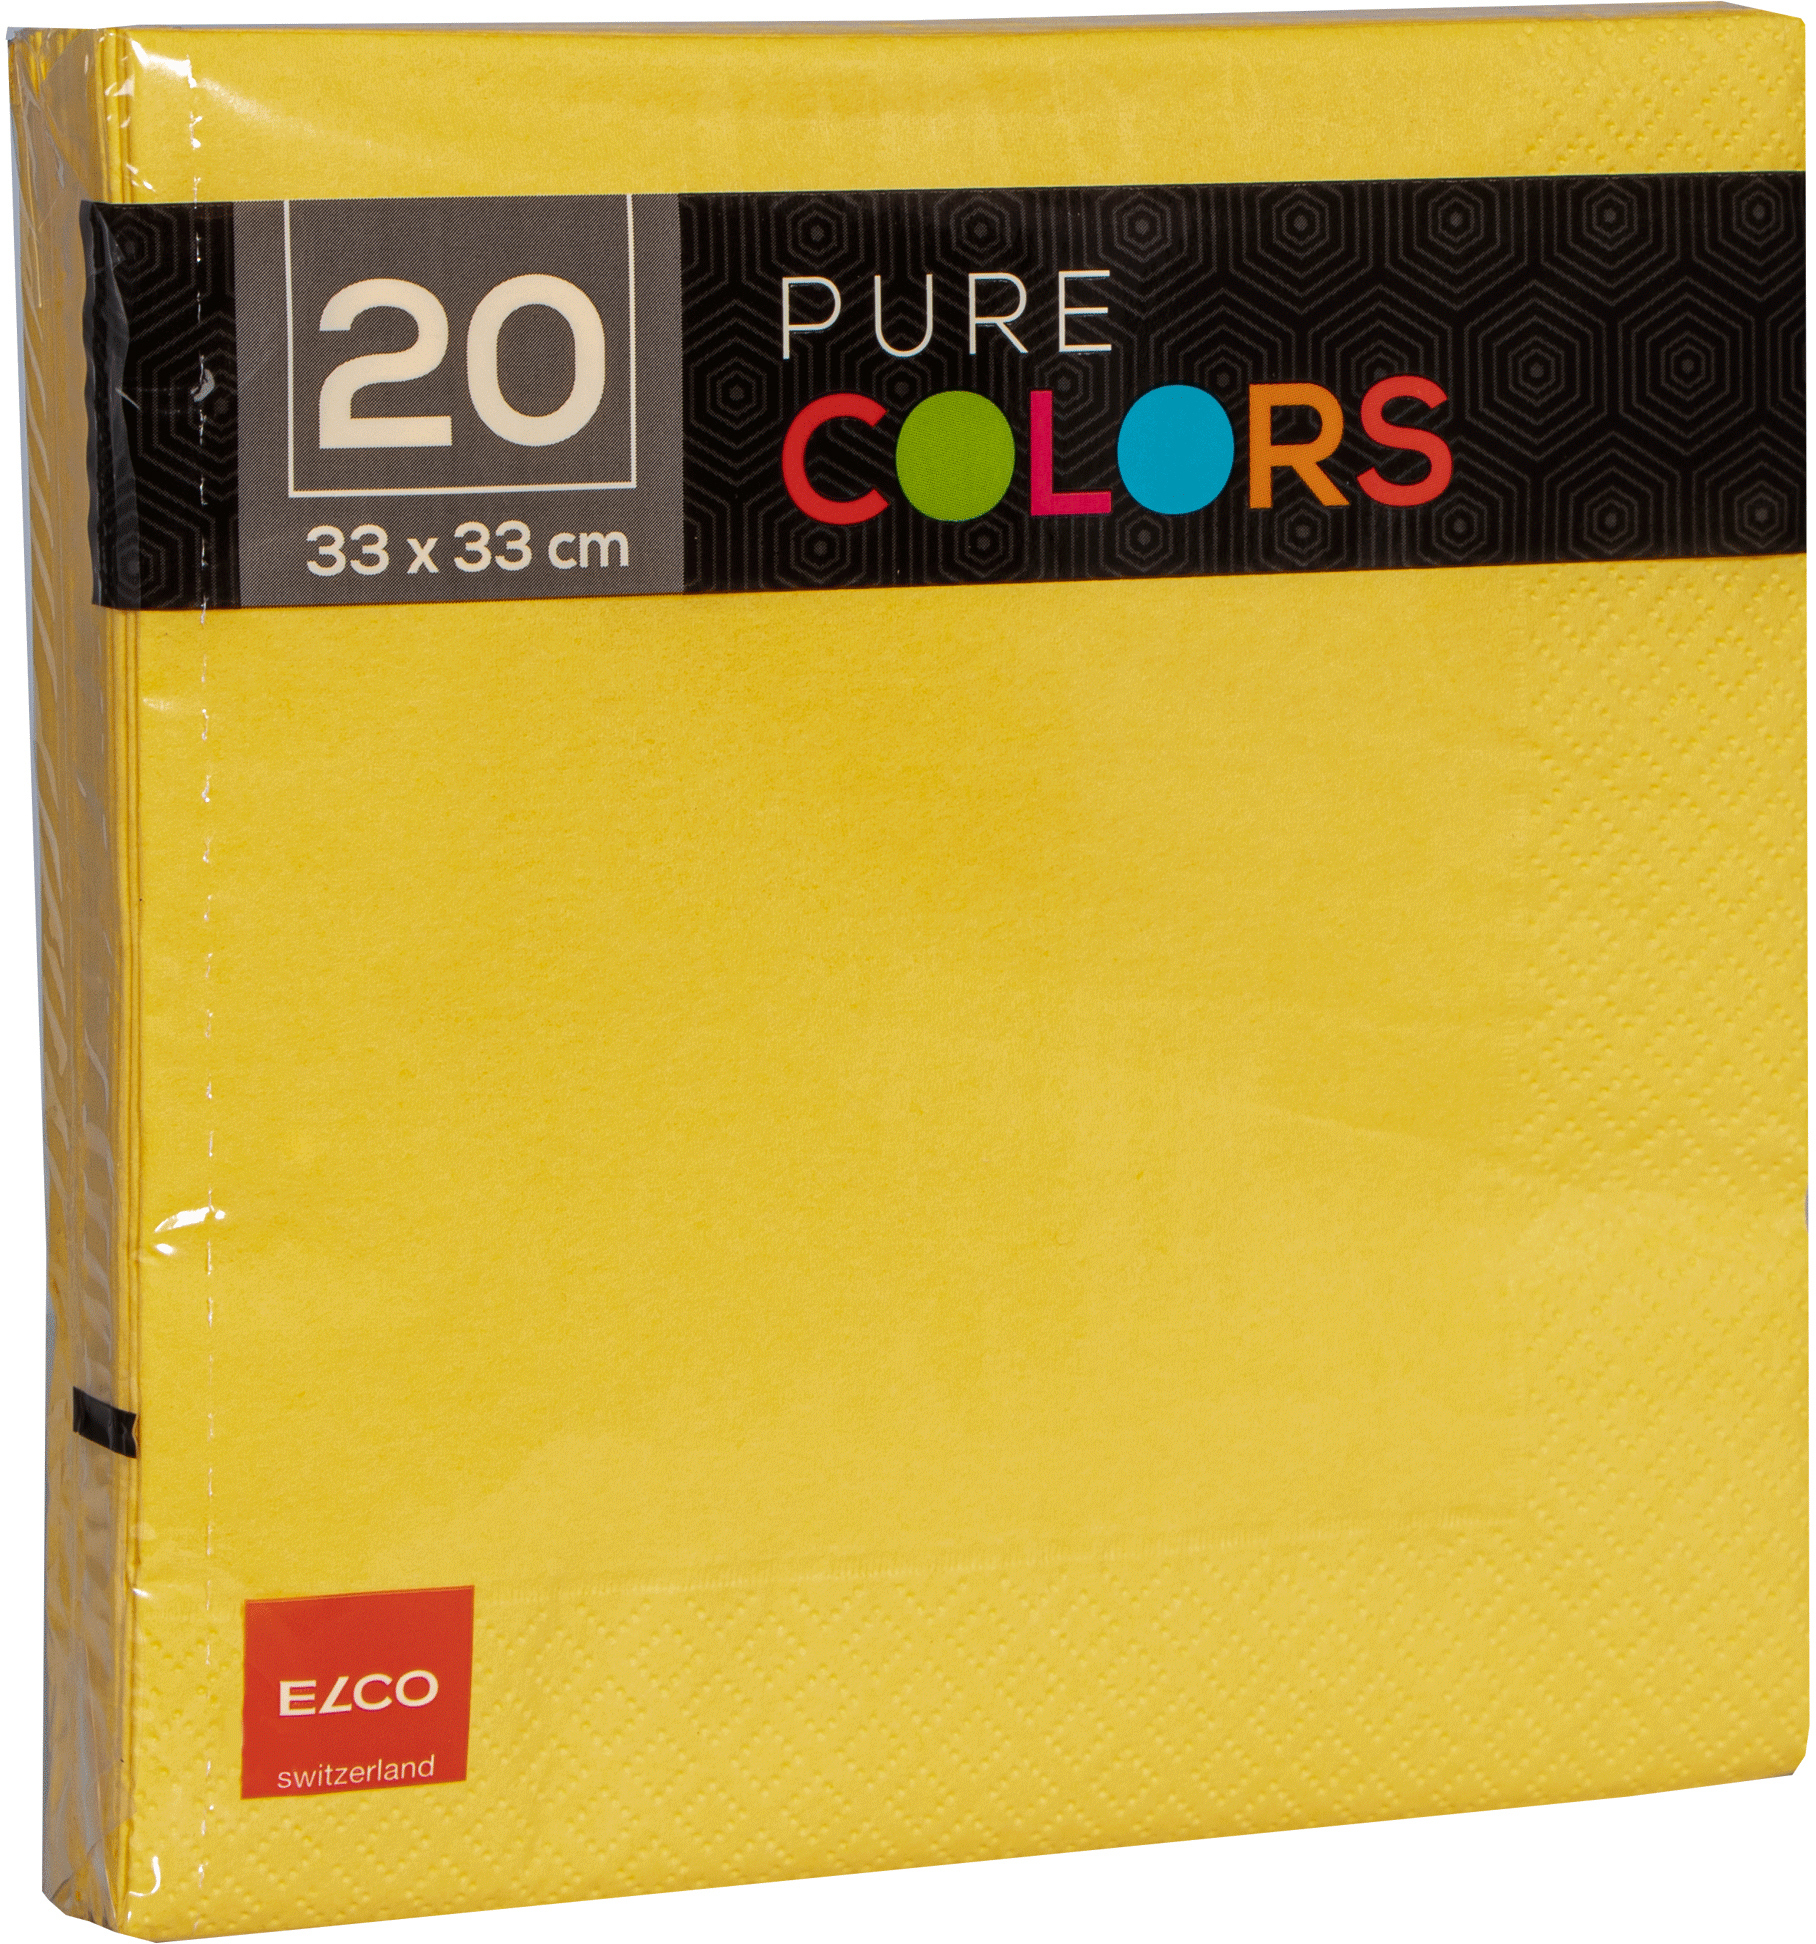 ELCO Serviettes tissue 33x33cm PC334020-010 3 plis, jaune 20pcs. 3 plis, jaune 20pcs.